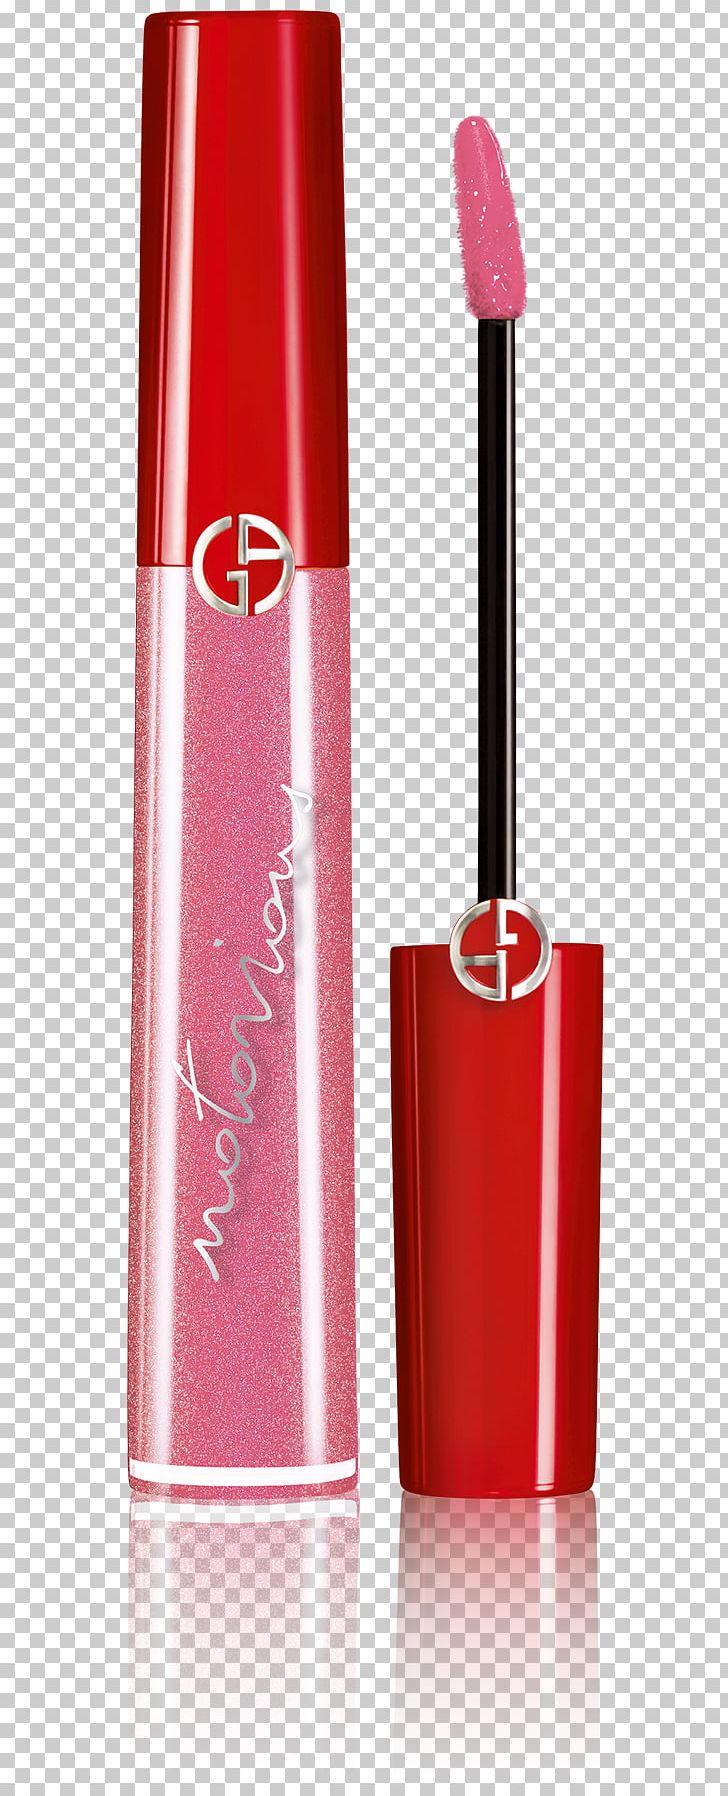 Lip Balm Lipstick Lip Gloss Armani Cosmetics PNG, Clipart, Armani, Beauty, Color, Cosmetics, Fashion Free PNG Download